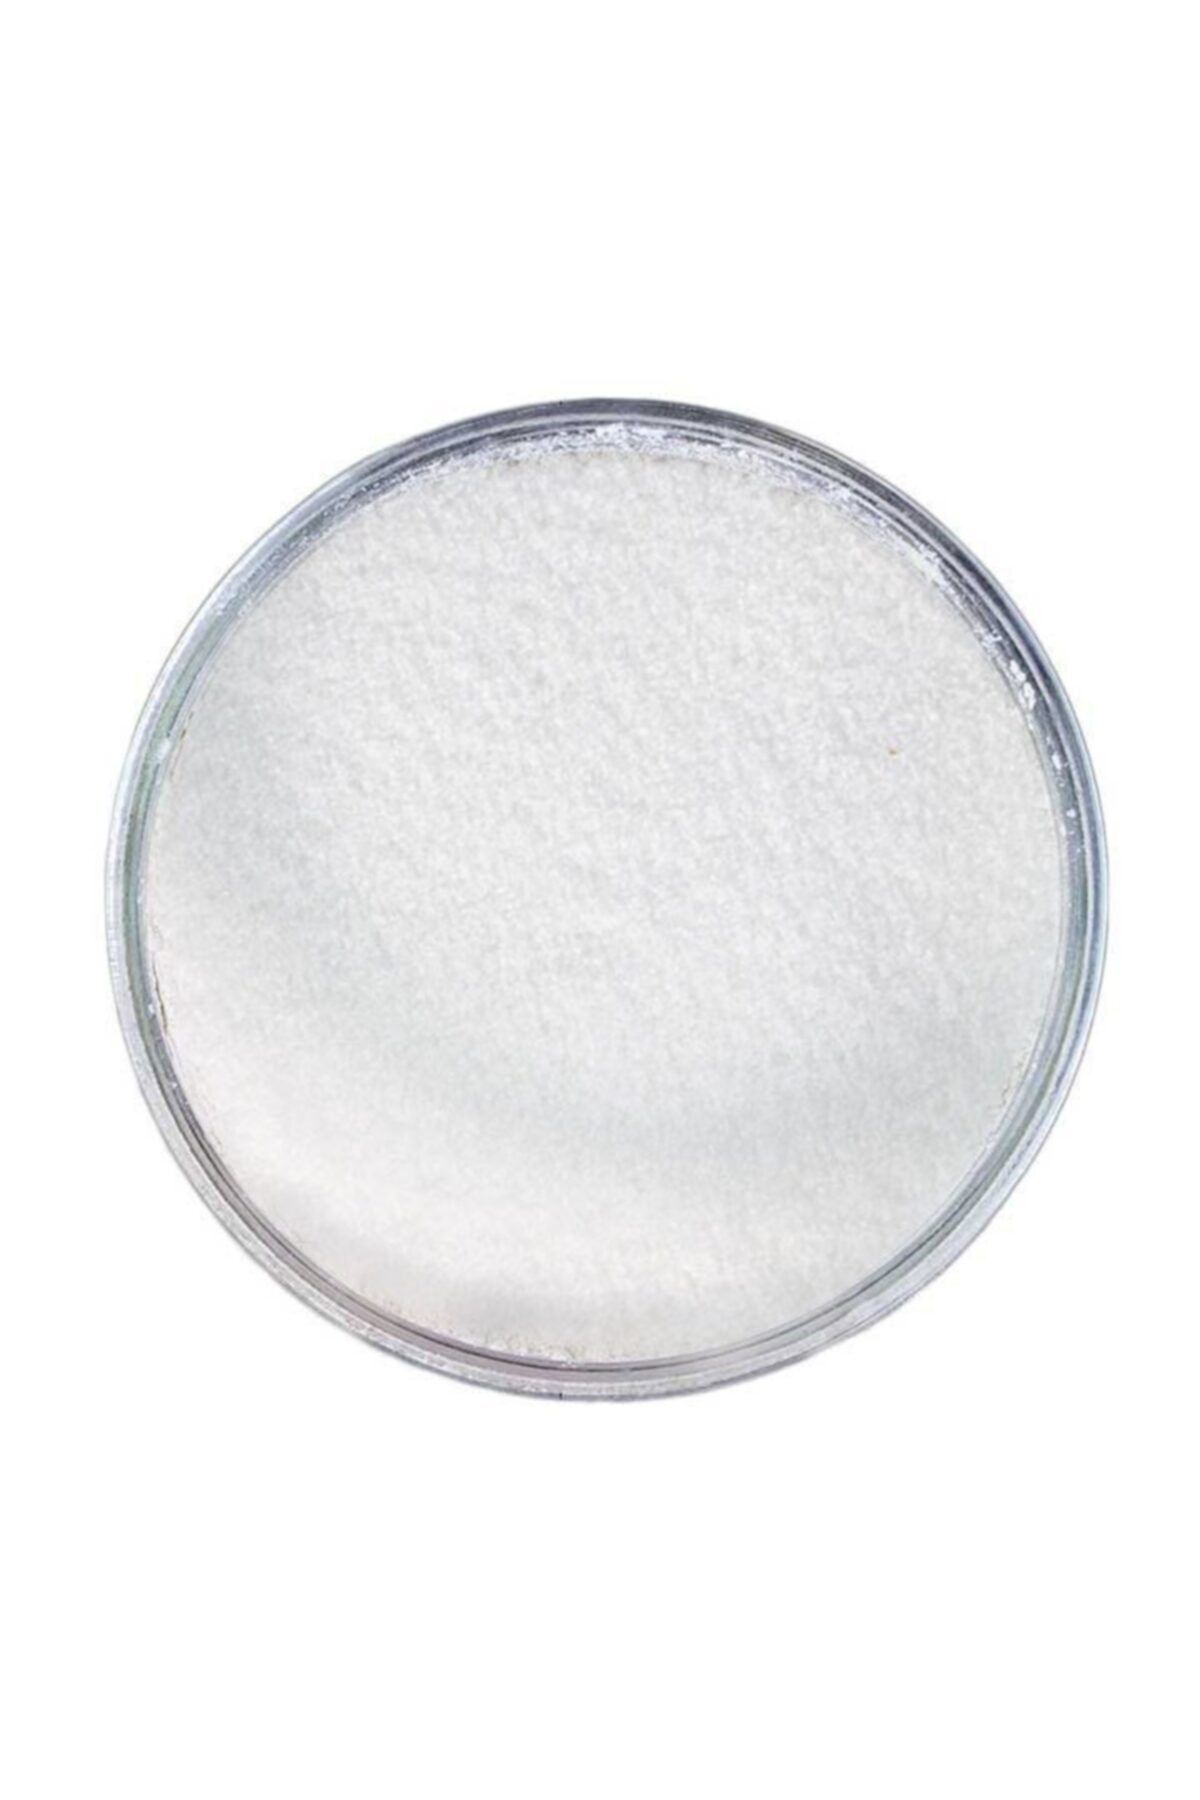 Alfasol Nitritli Tuz (% 0,6 lık) 1 kg